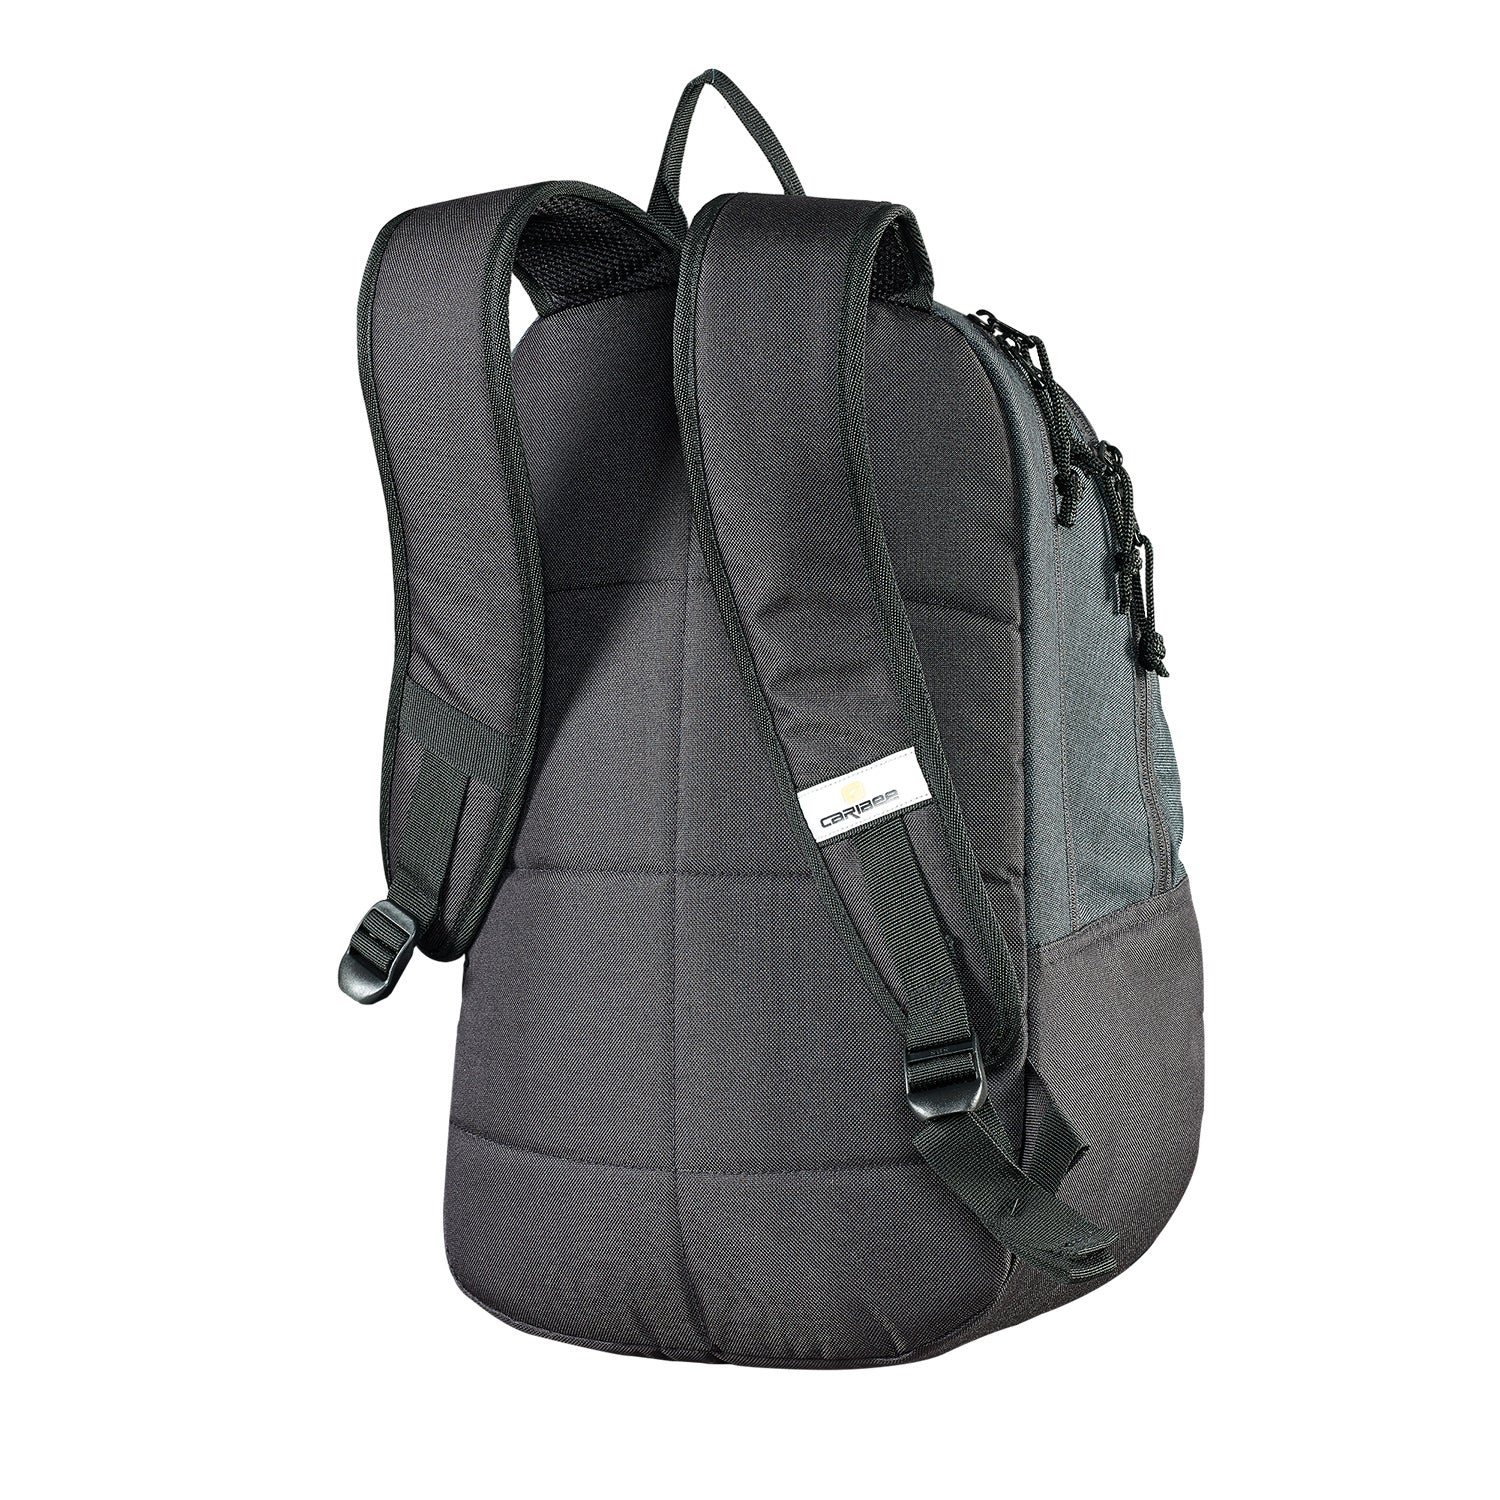 Caribee Rush backpack Black rear view